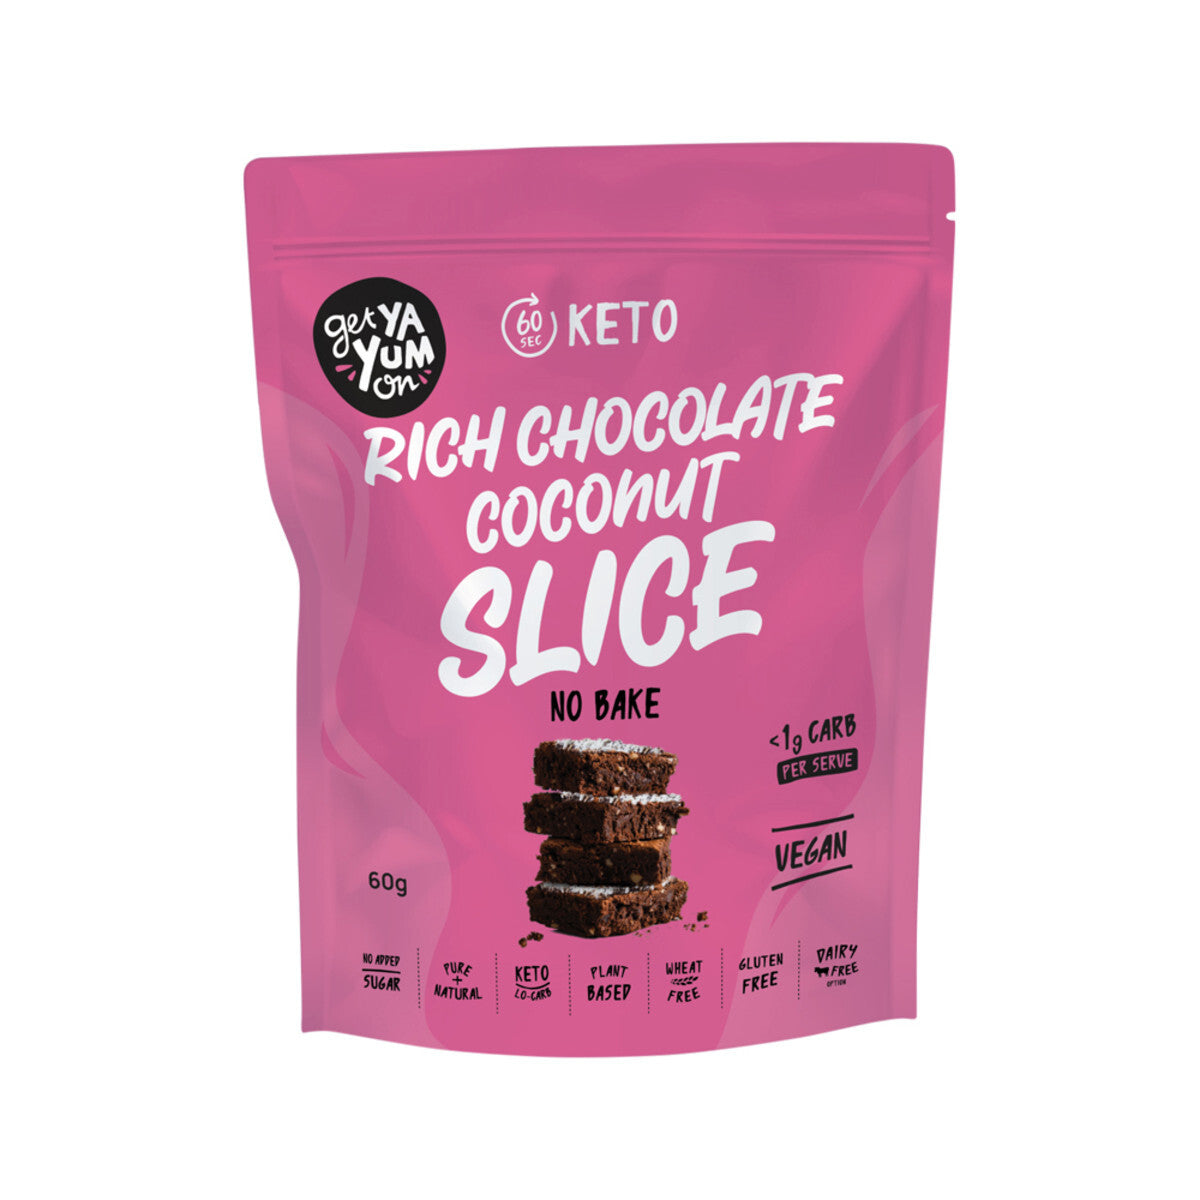 Get ya yum on Rich Chocolate Coconut Slice no bake 60g